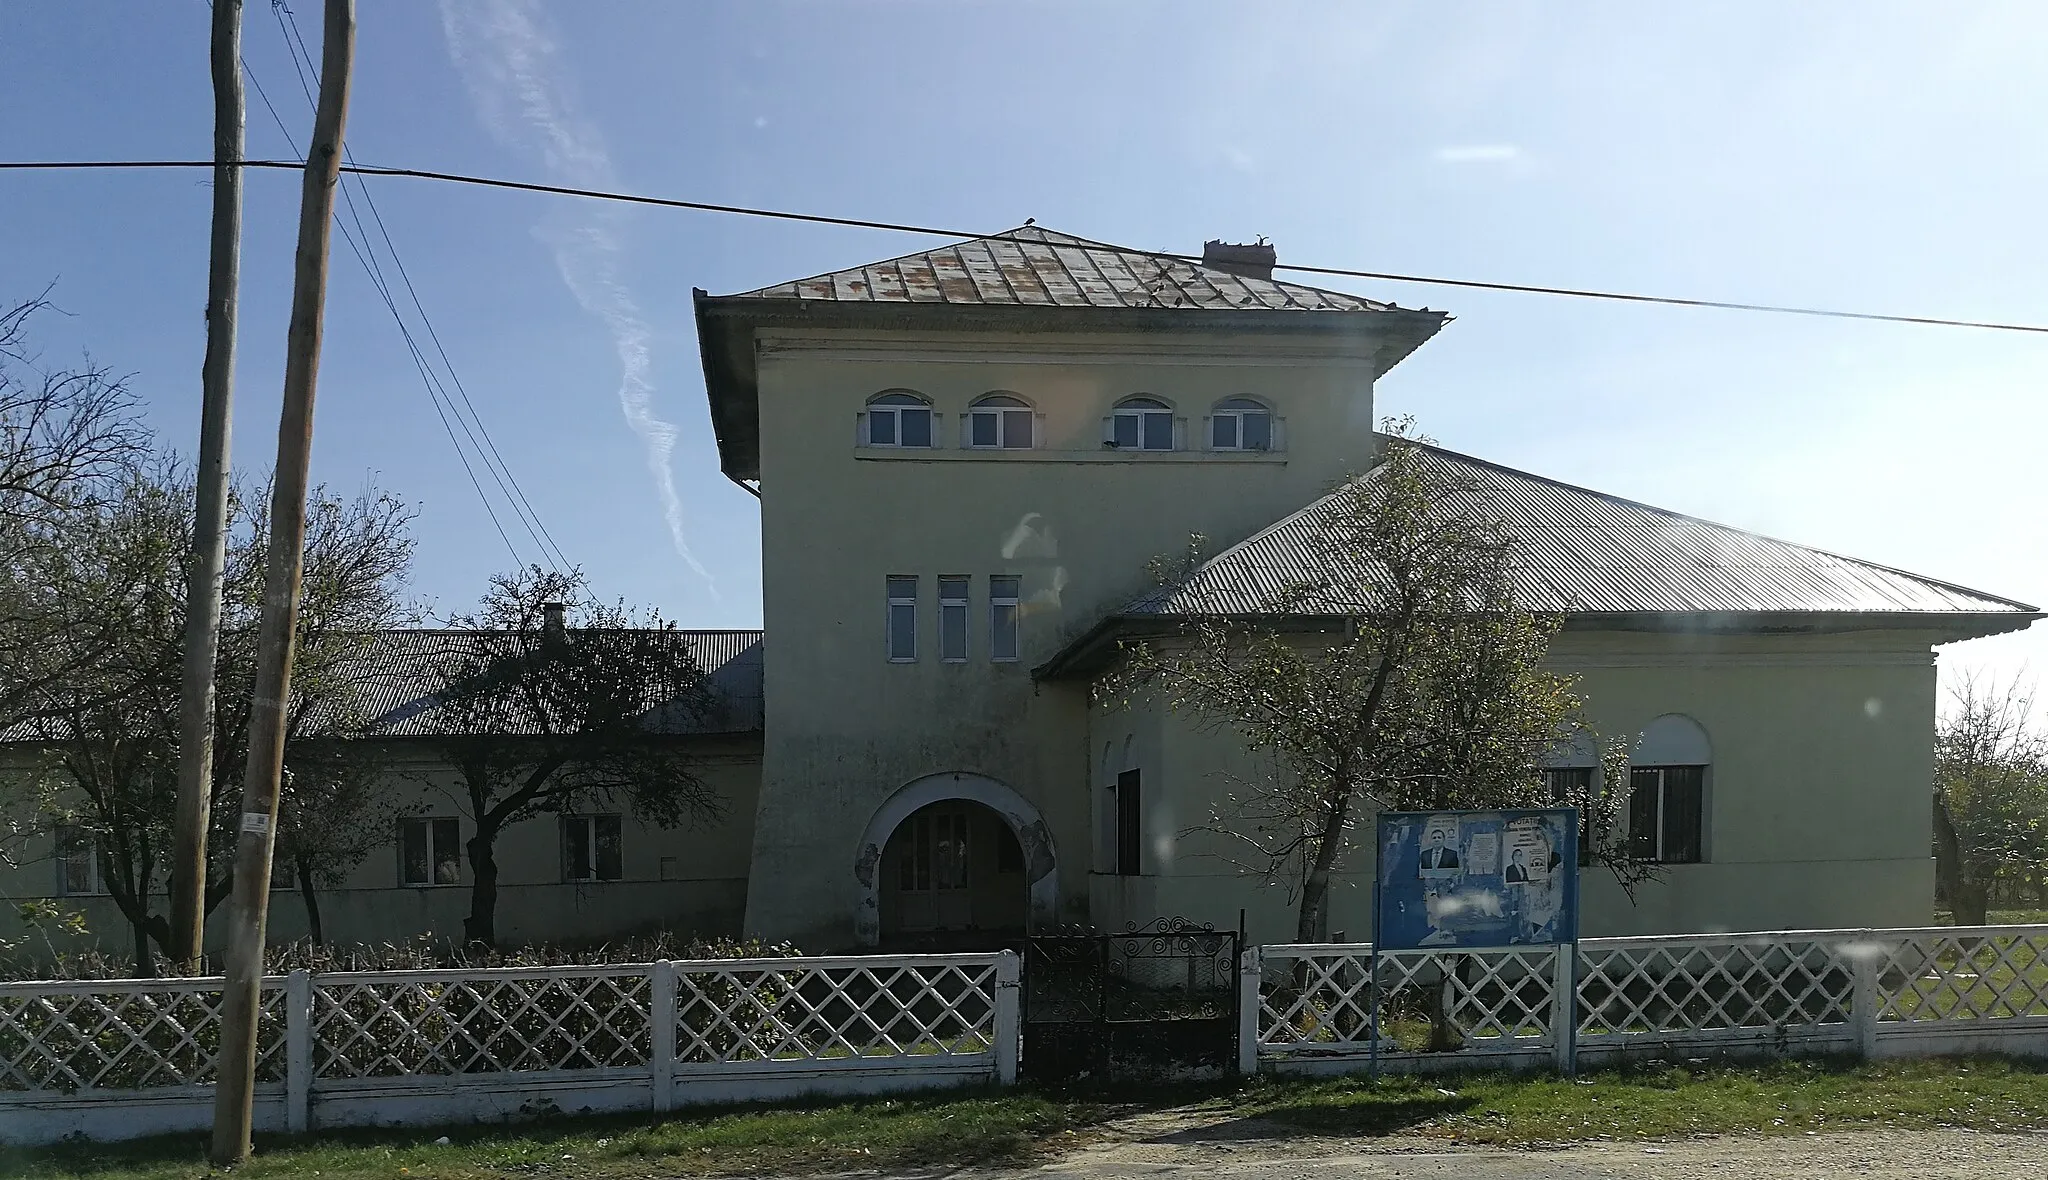 Photo showing: Building in Jitaru, Olt County, Romania